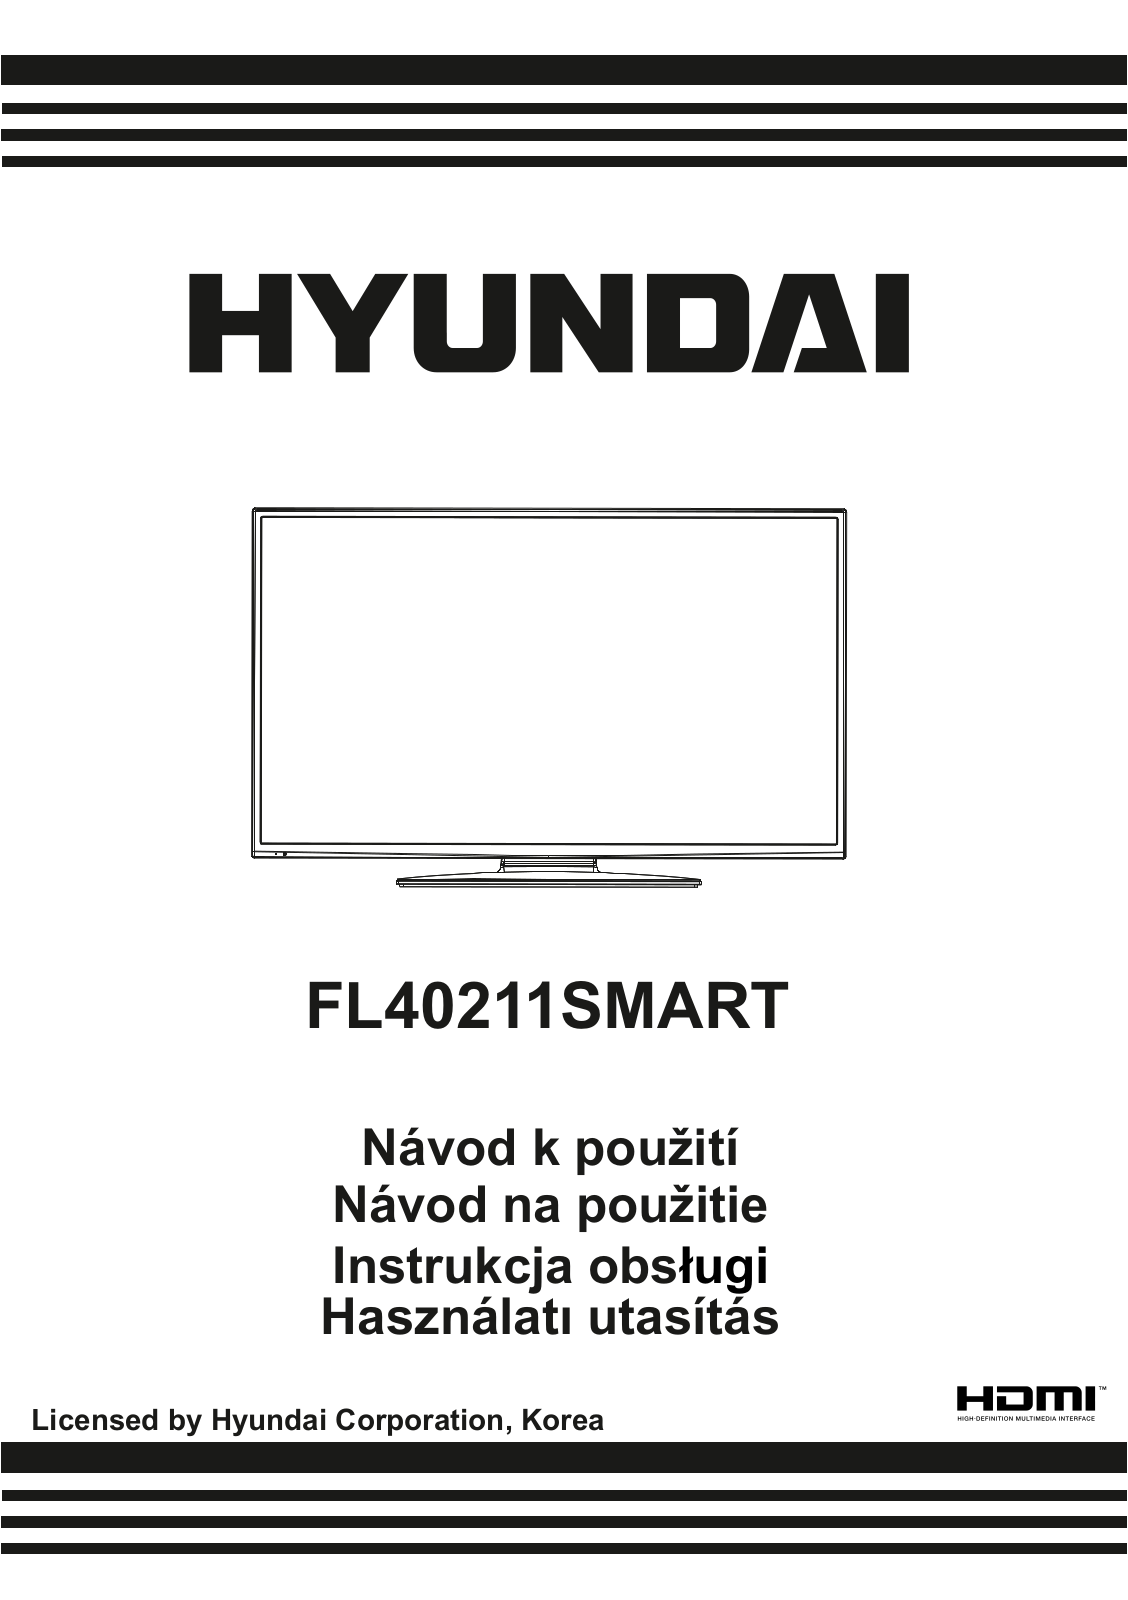 Hyundai FL 40211 User Manual